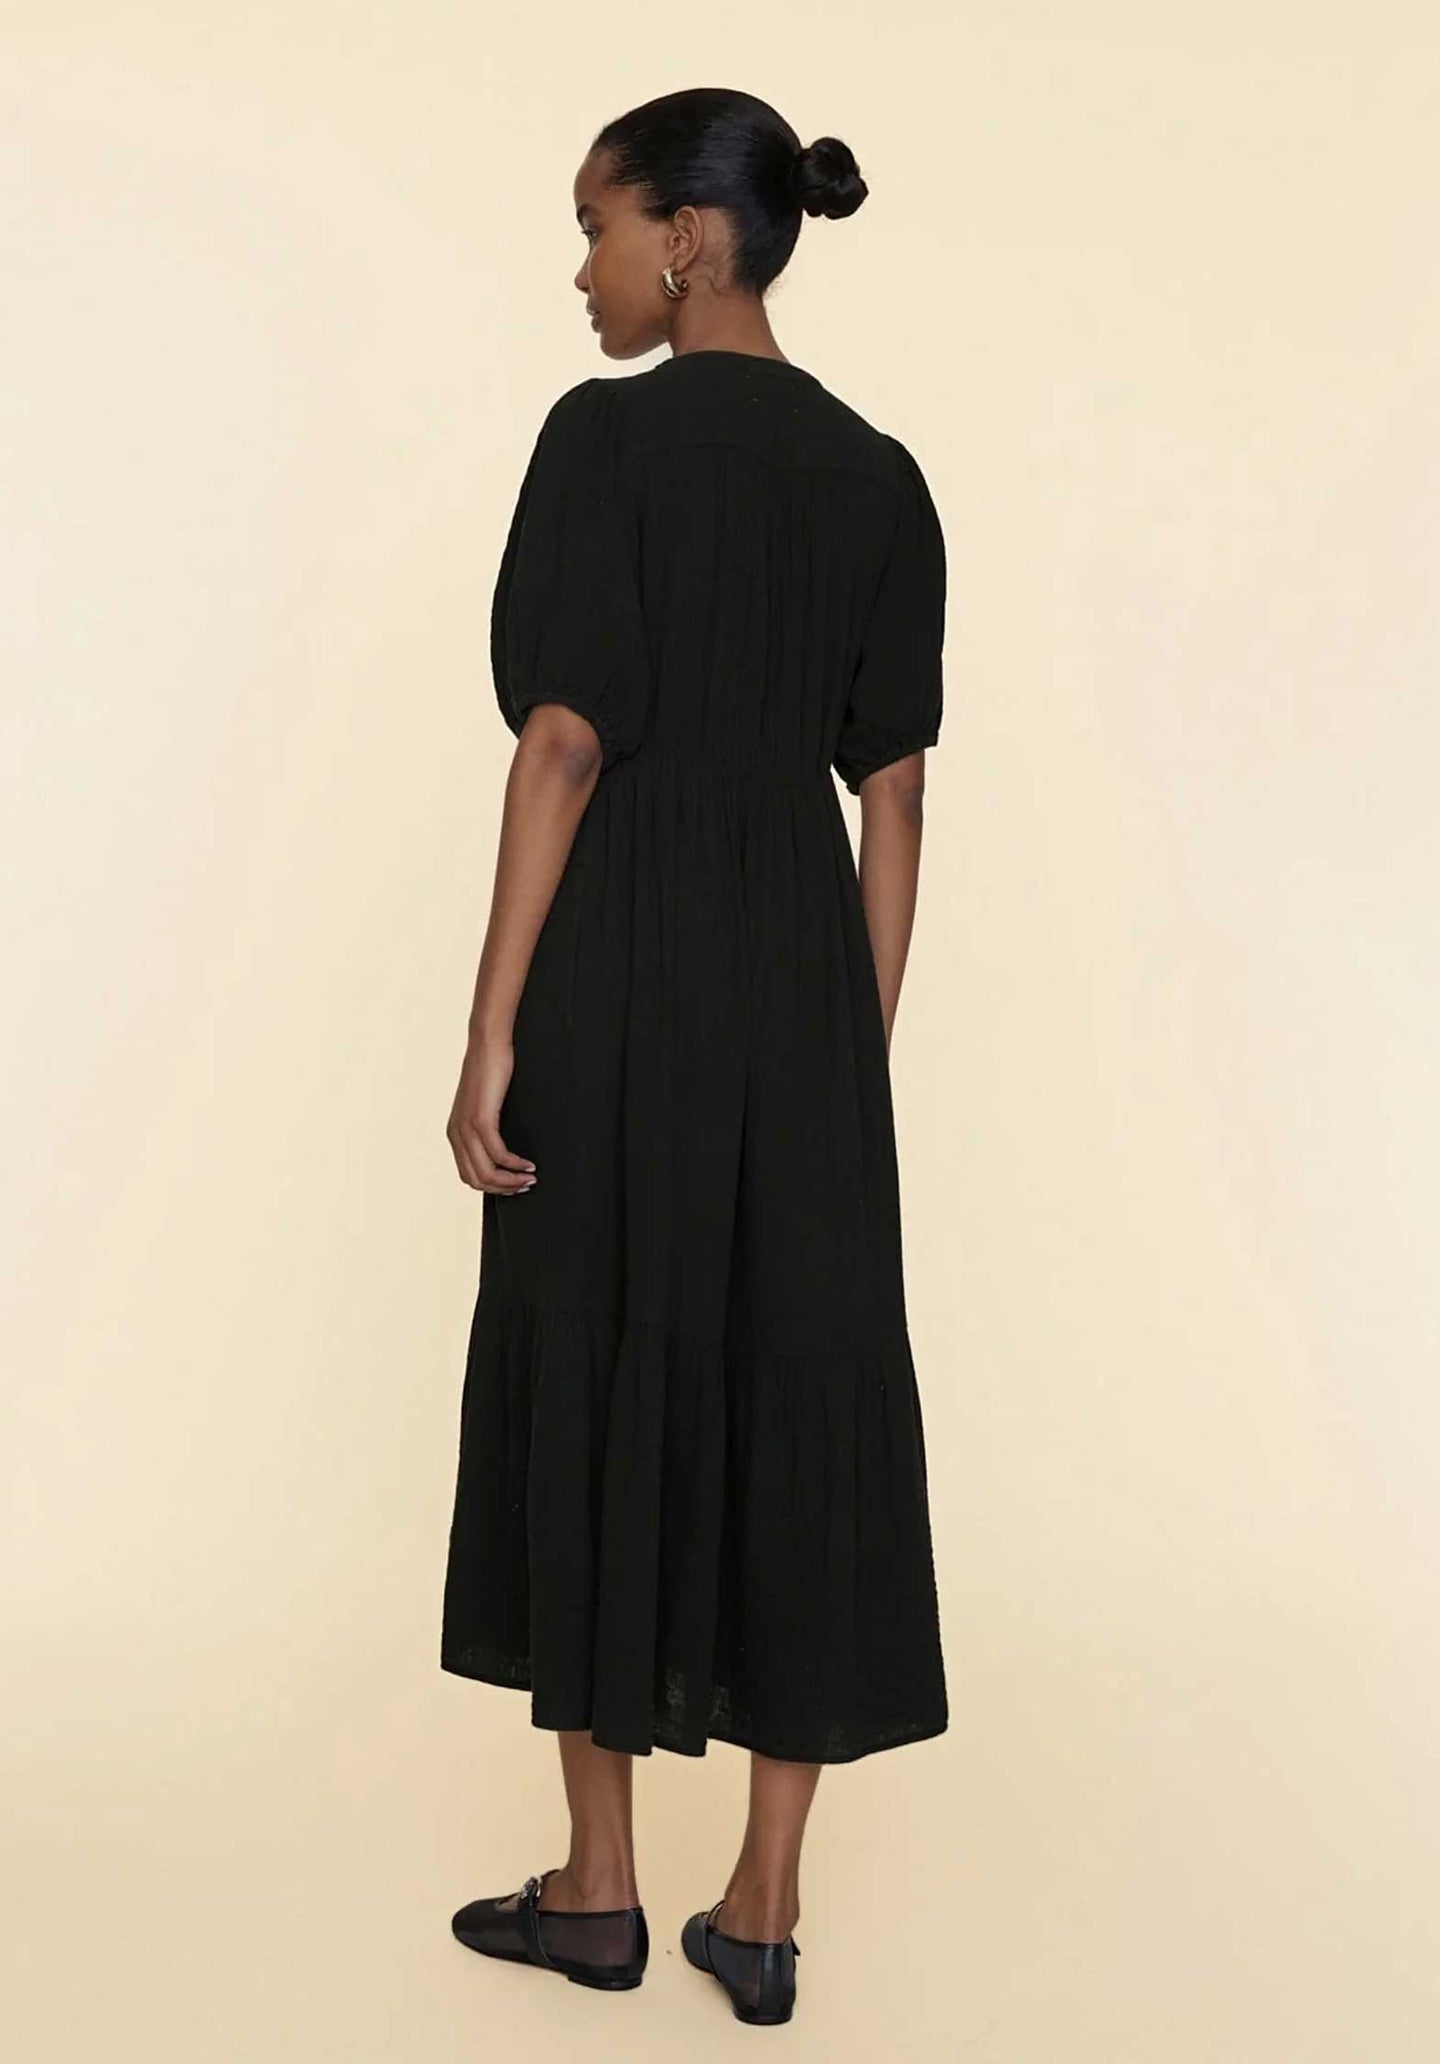 Dress X4chg008 Lennox Dress 008 Black